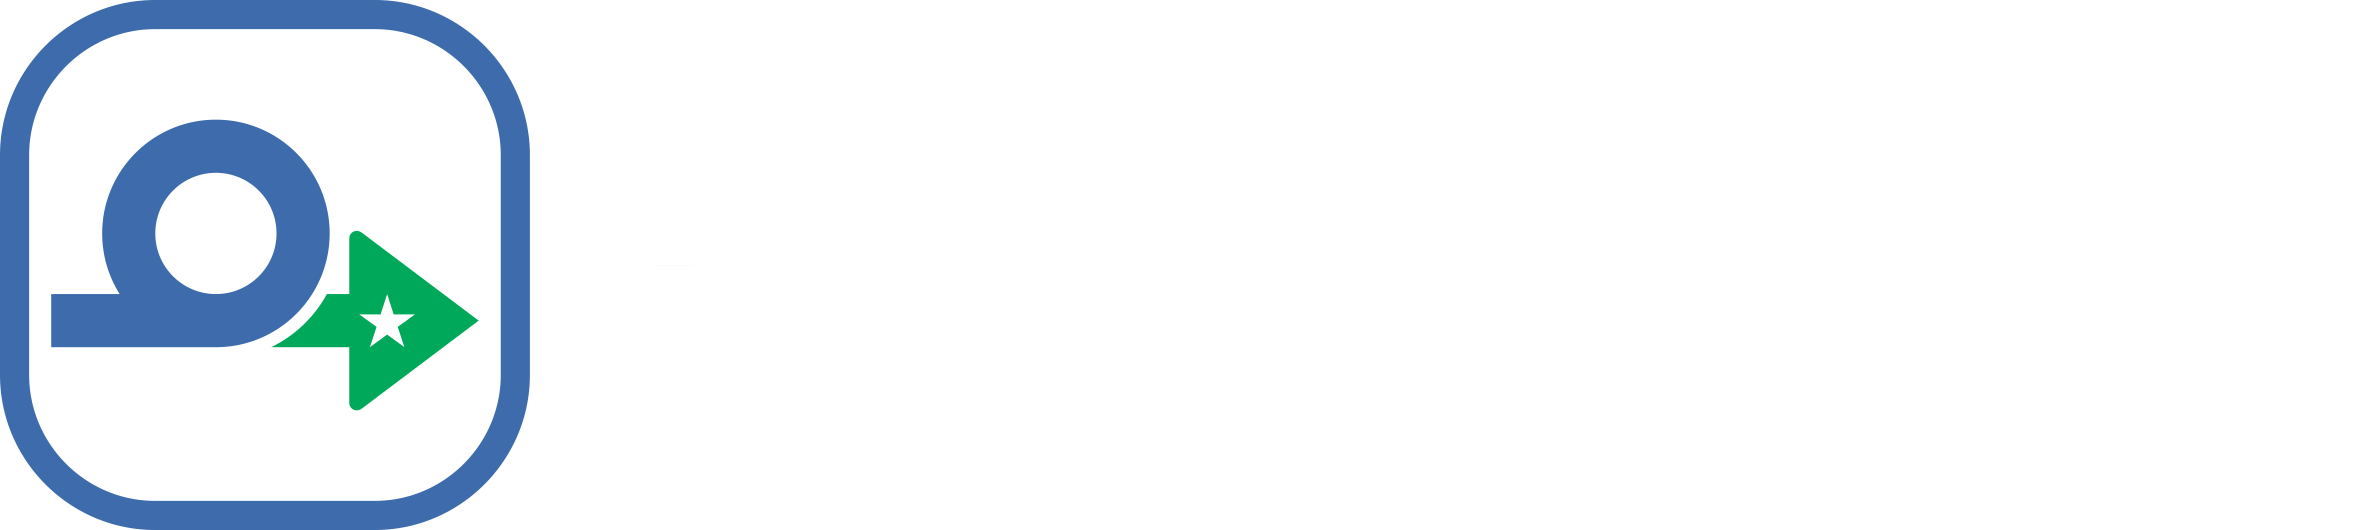 RevoluRealty Logo